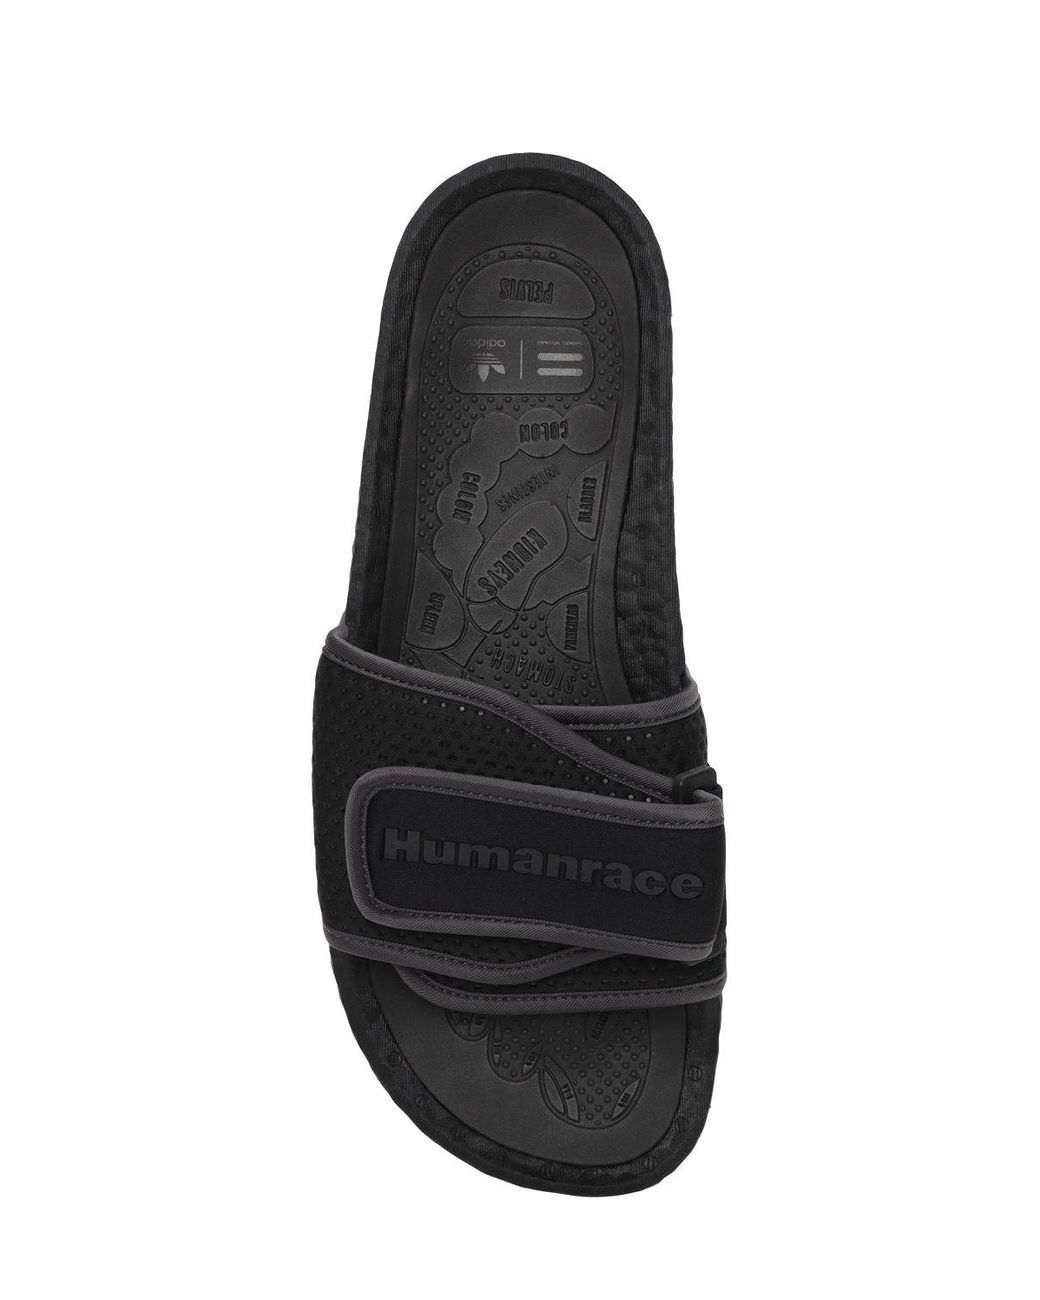 adidas Originals Pharrell Williams Chancletas Hu Sandals in Black | Lyst